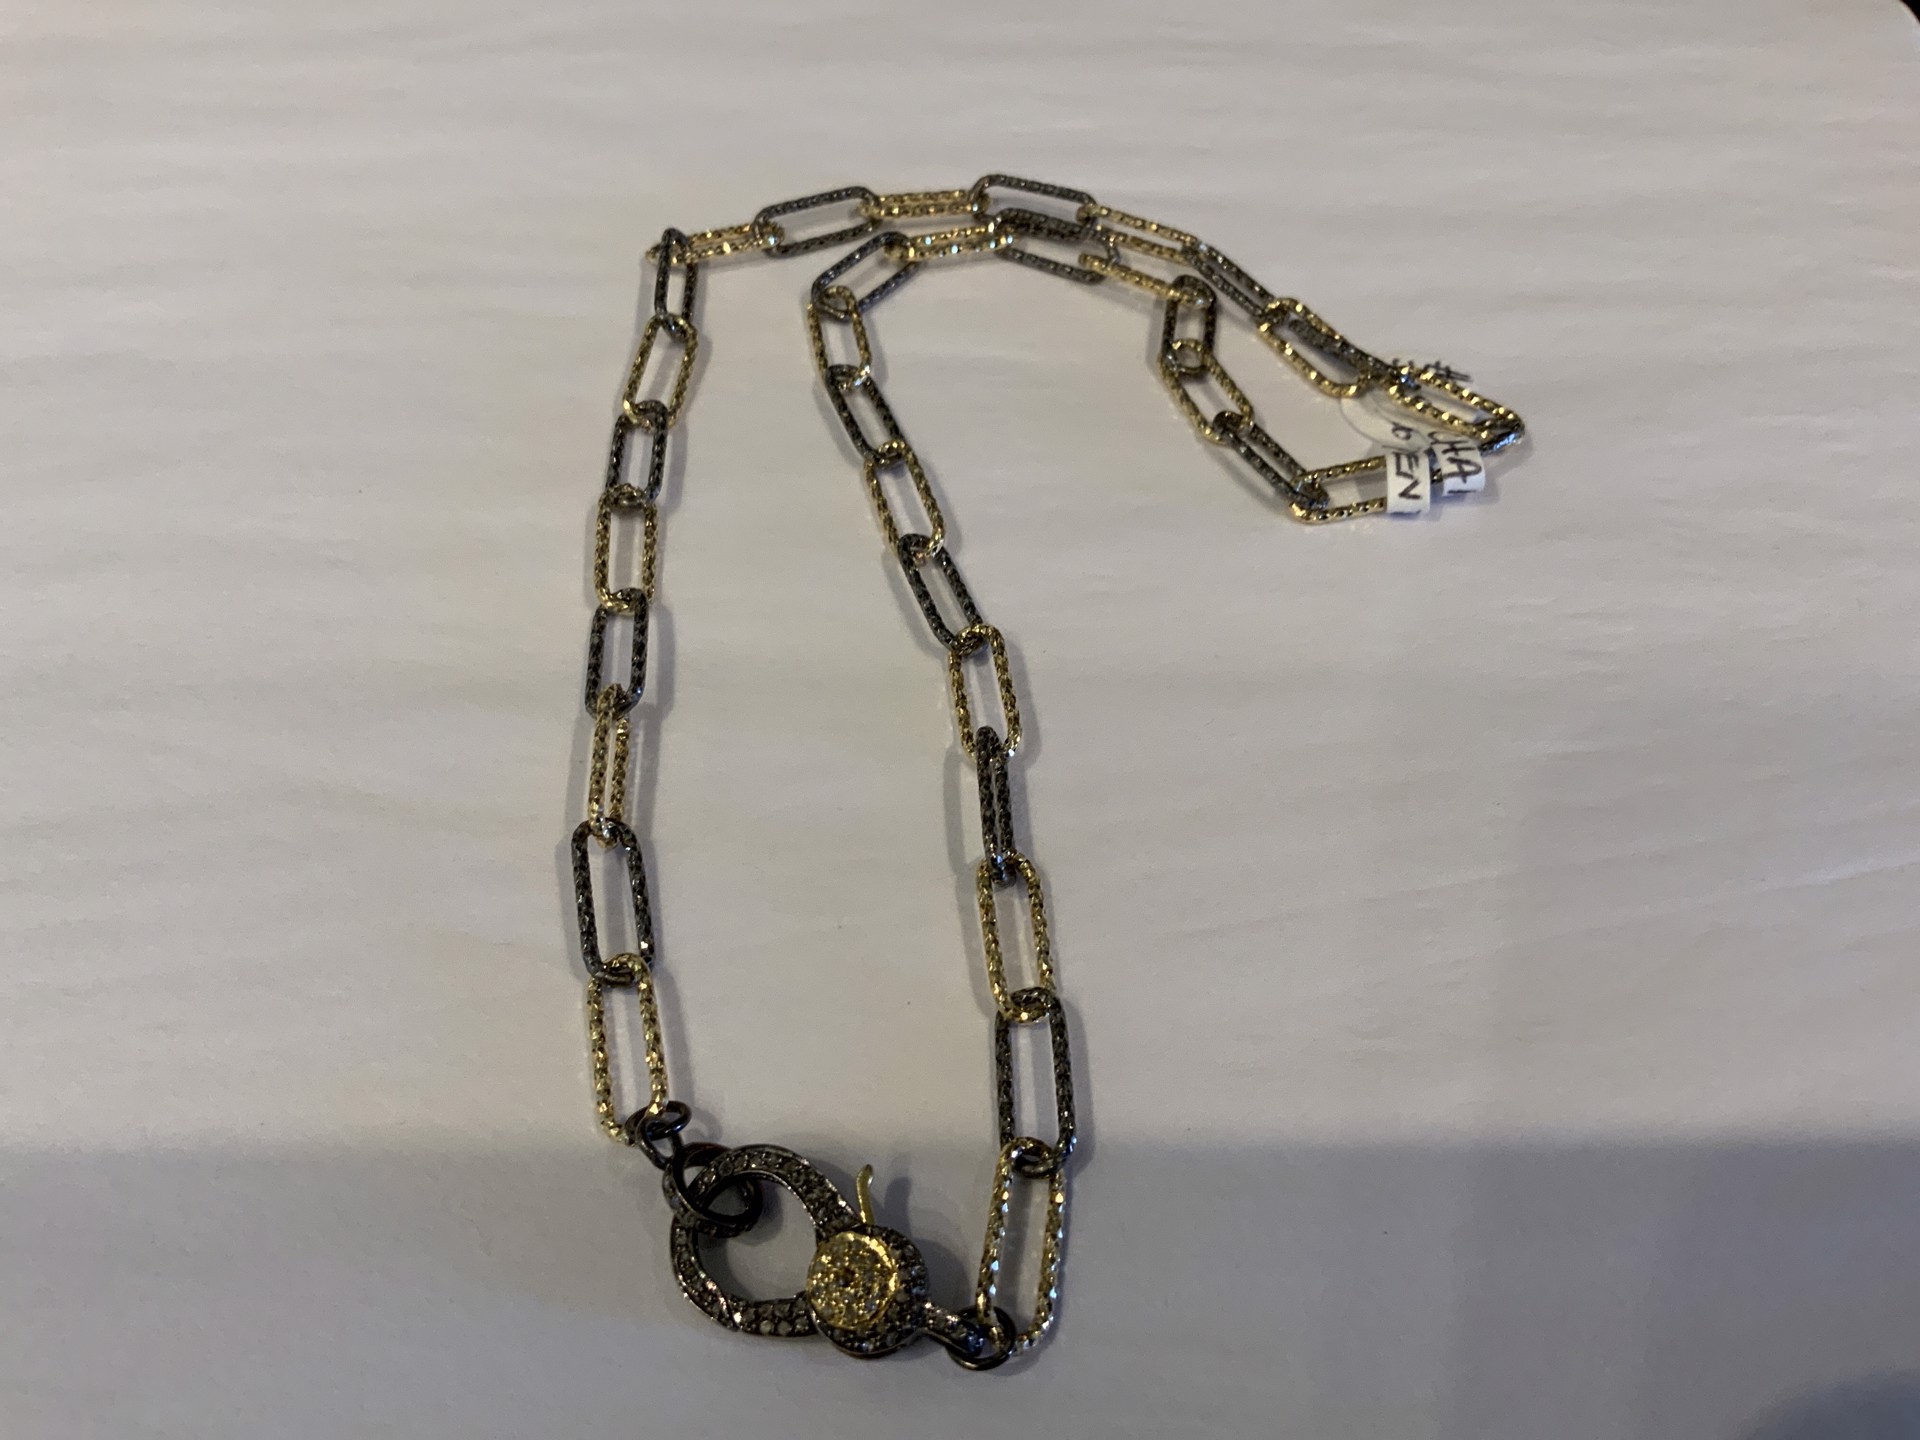 Two Tone paper clip chain by Karen Birchmier